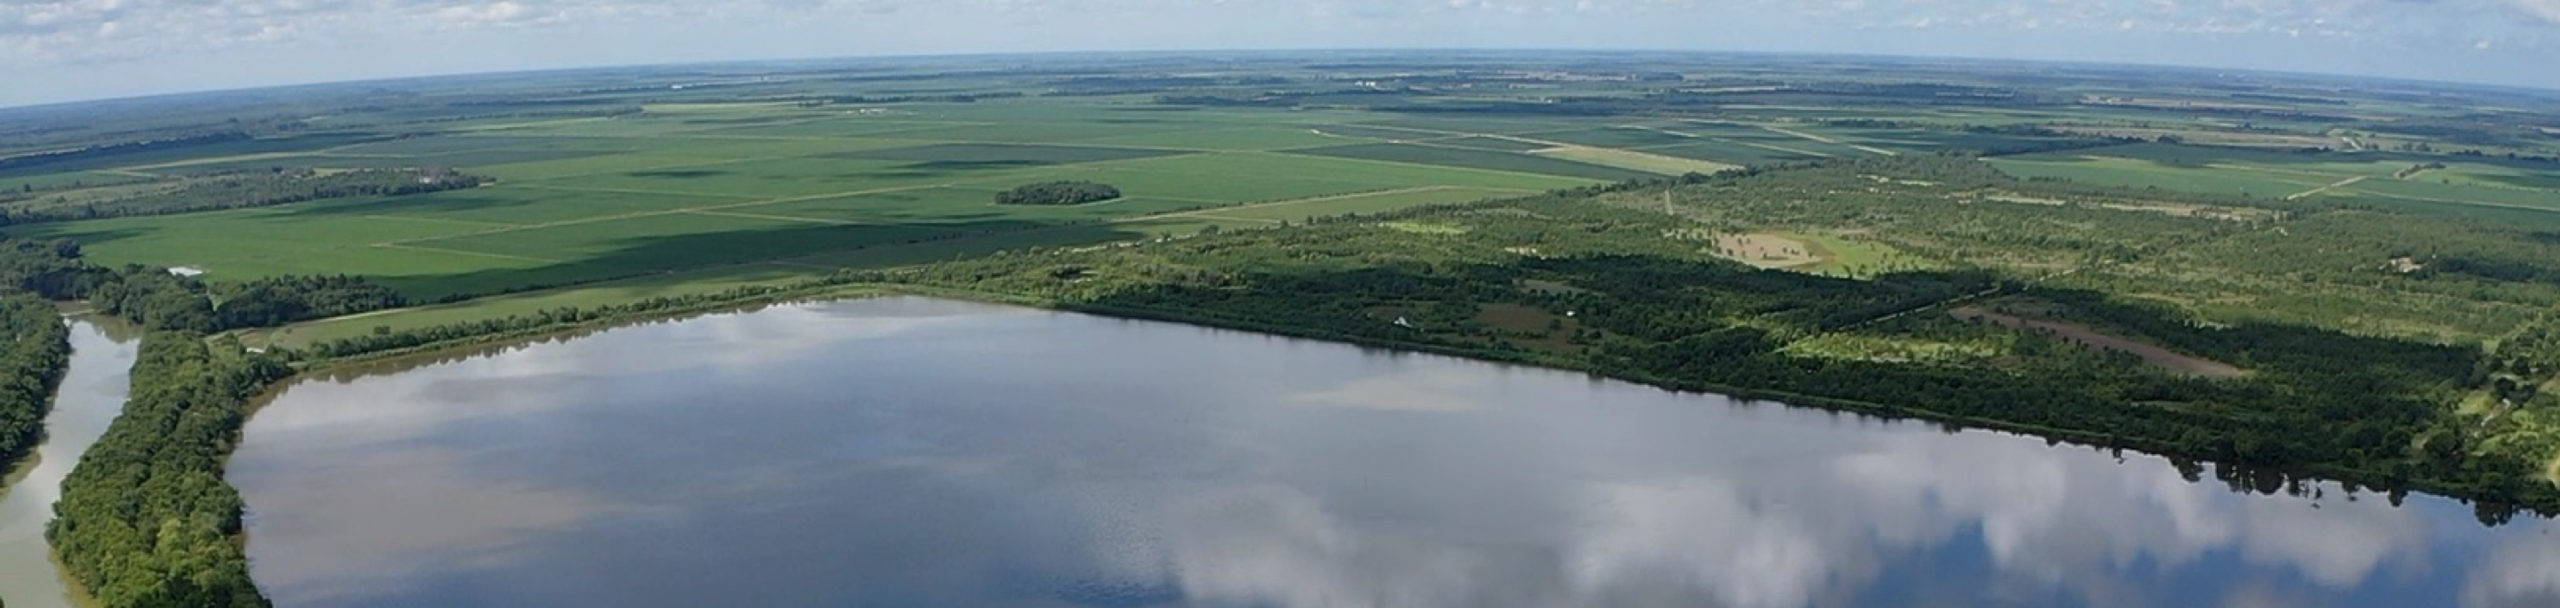 aerial shot of farmland around a large reservoir